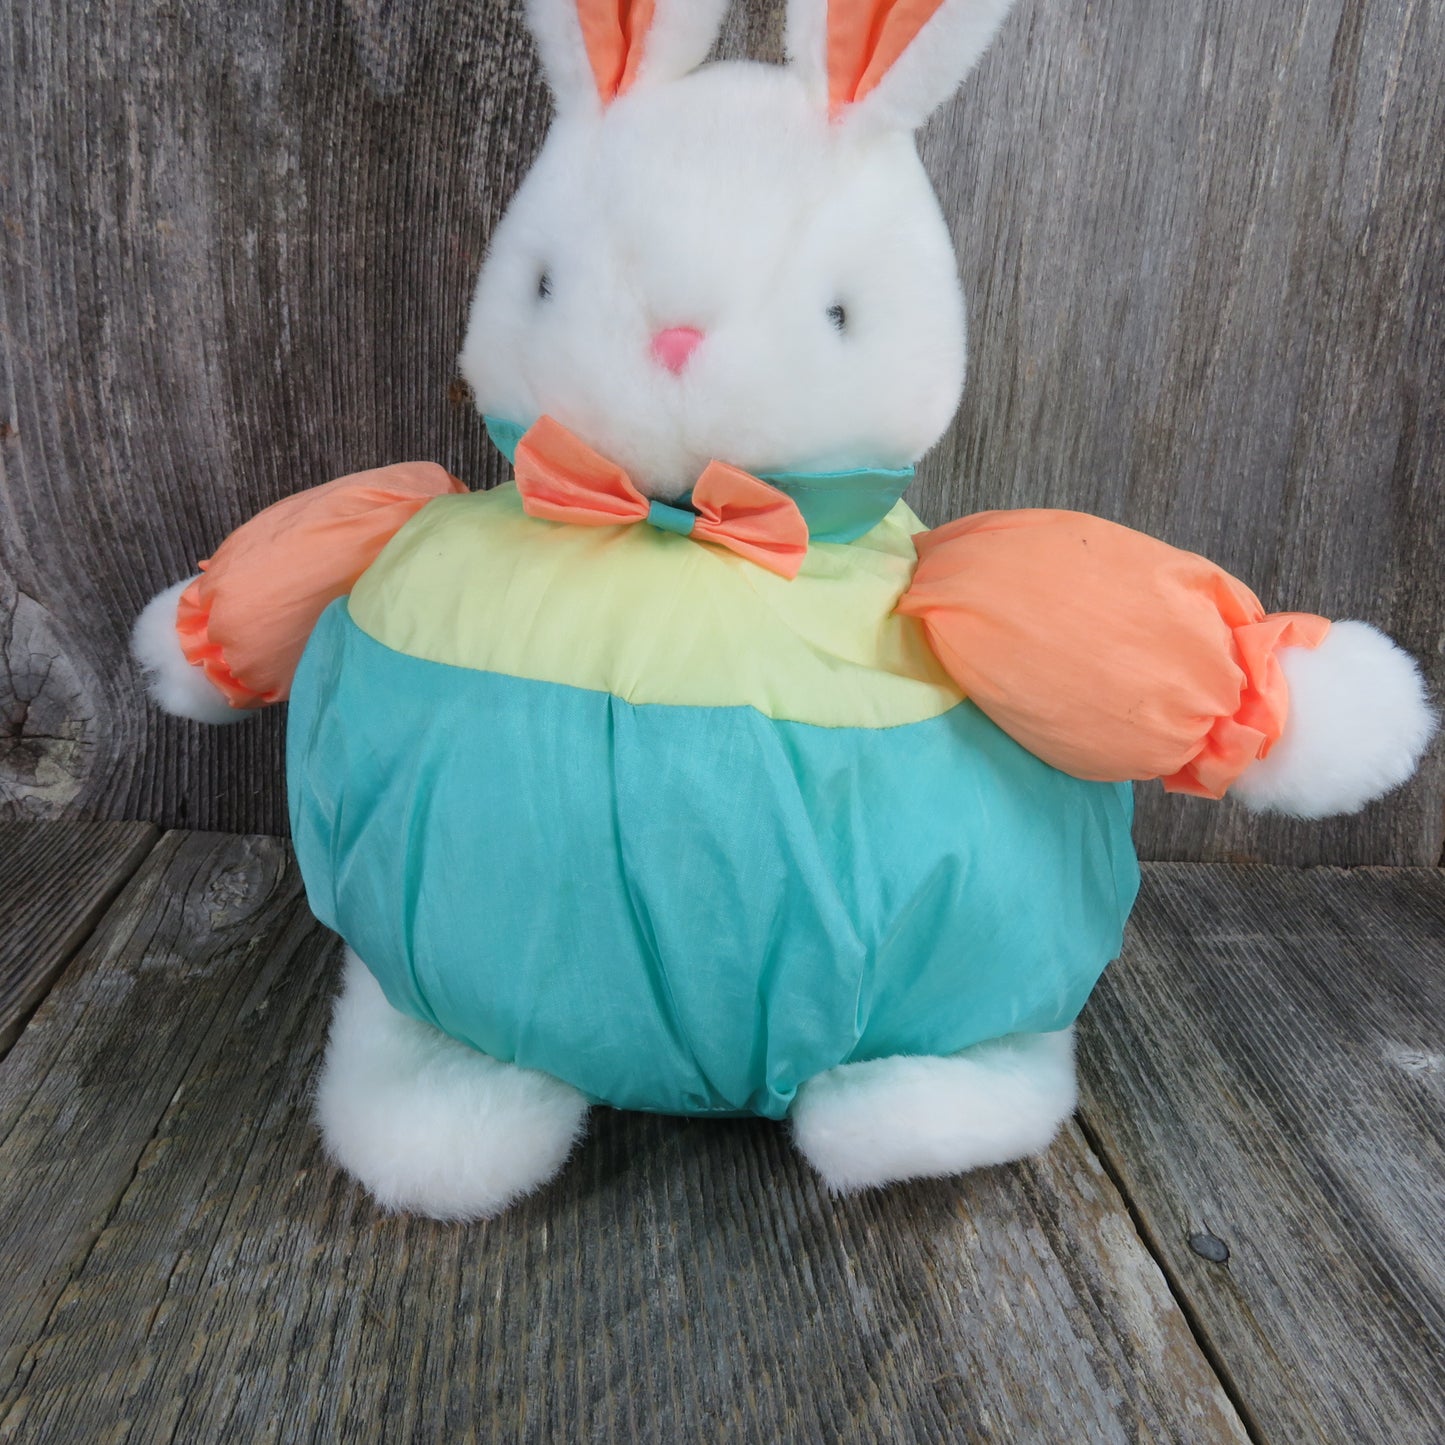 Vintage Bunny Rabbit Plush Dan Dee Pastel Green Peach Yellow Easter Stuffed Animal Puffy - At Grandma's Table